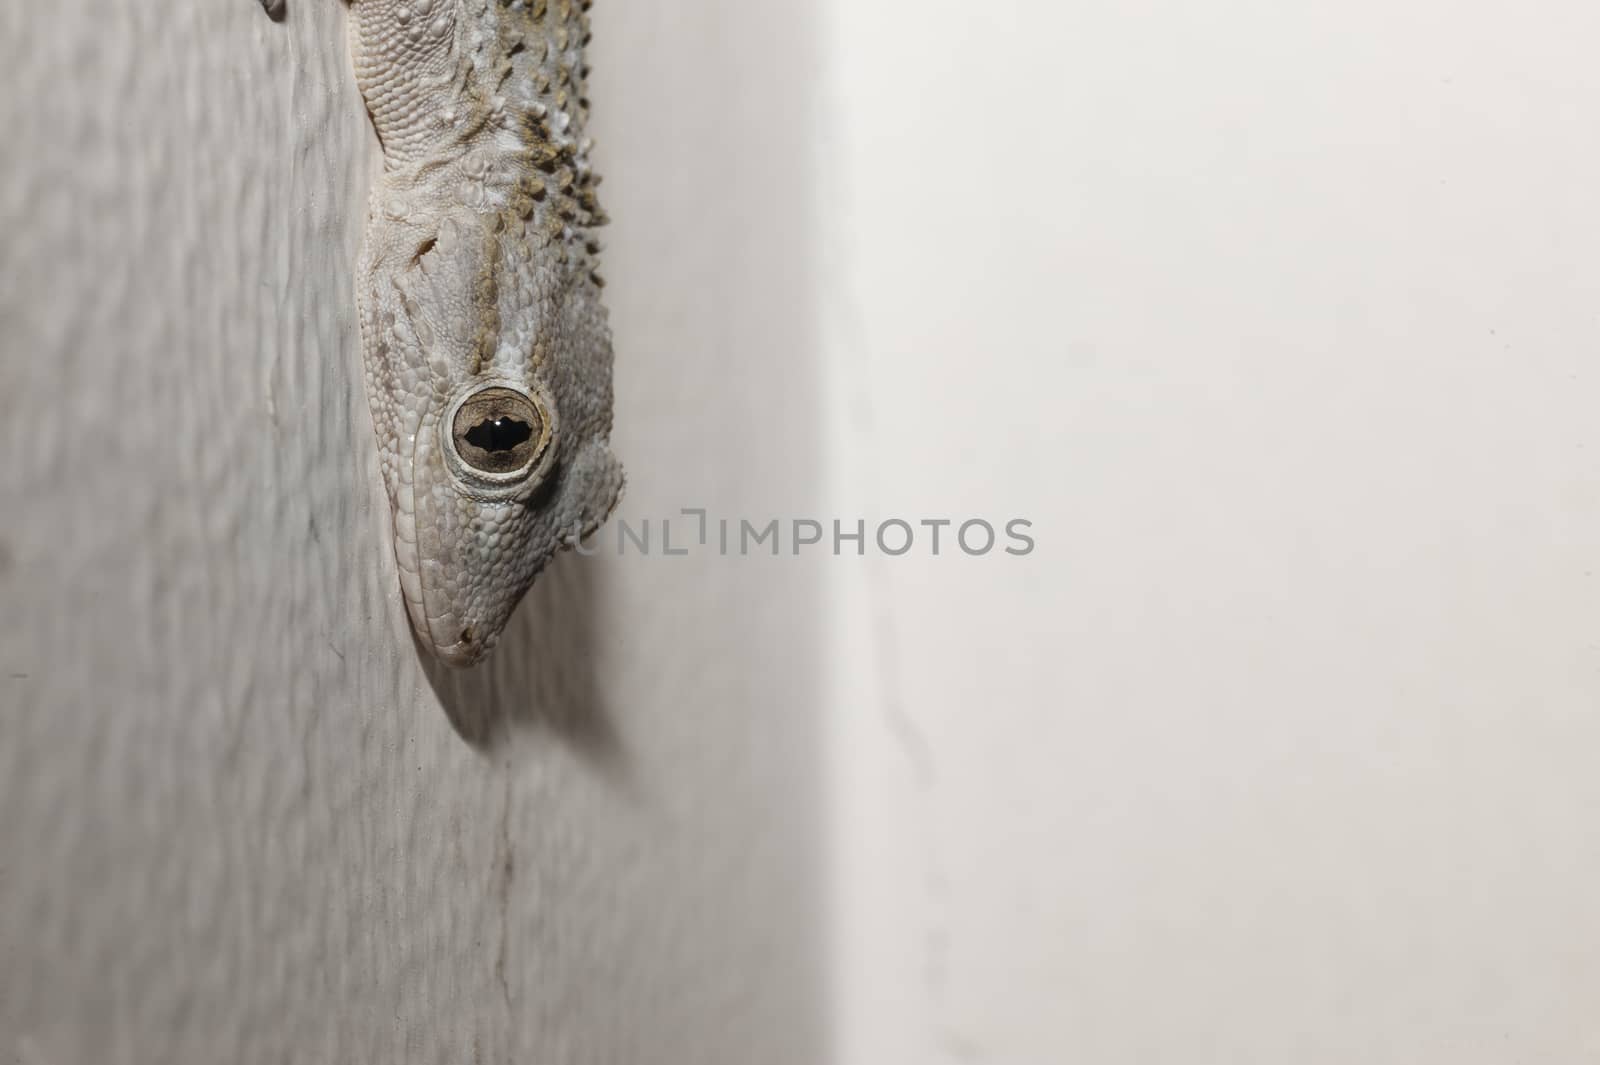 Gray house Gecko living inside a European house